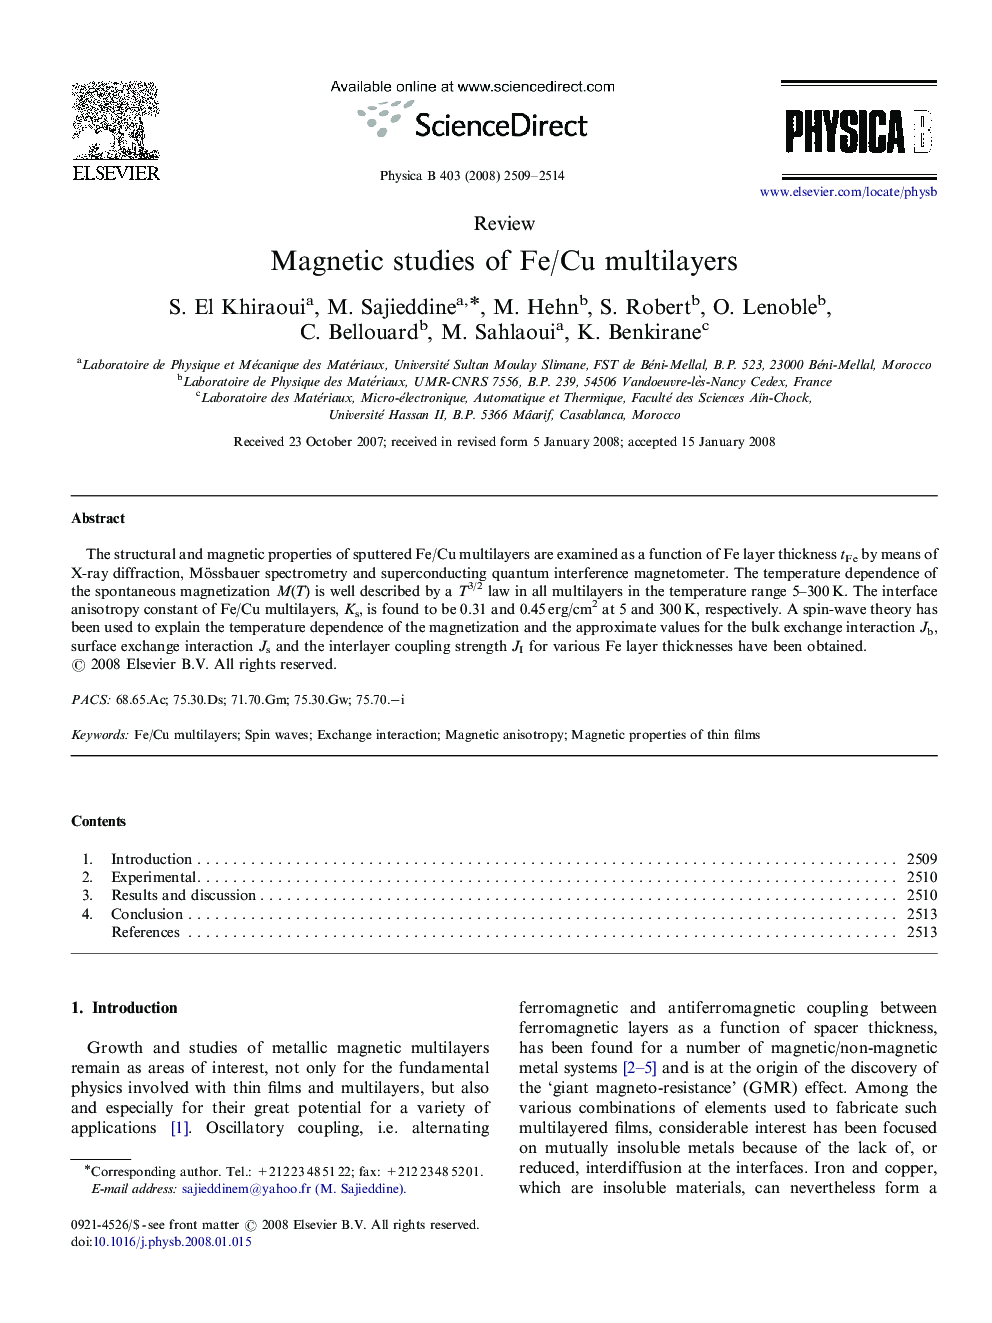 Magnetic studies of Fe/Cu multilayers